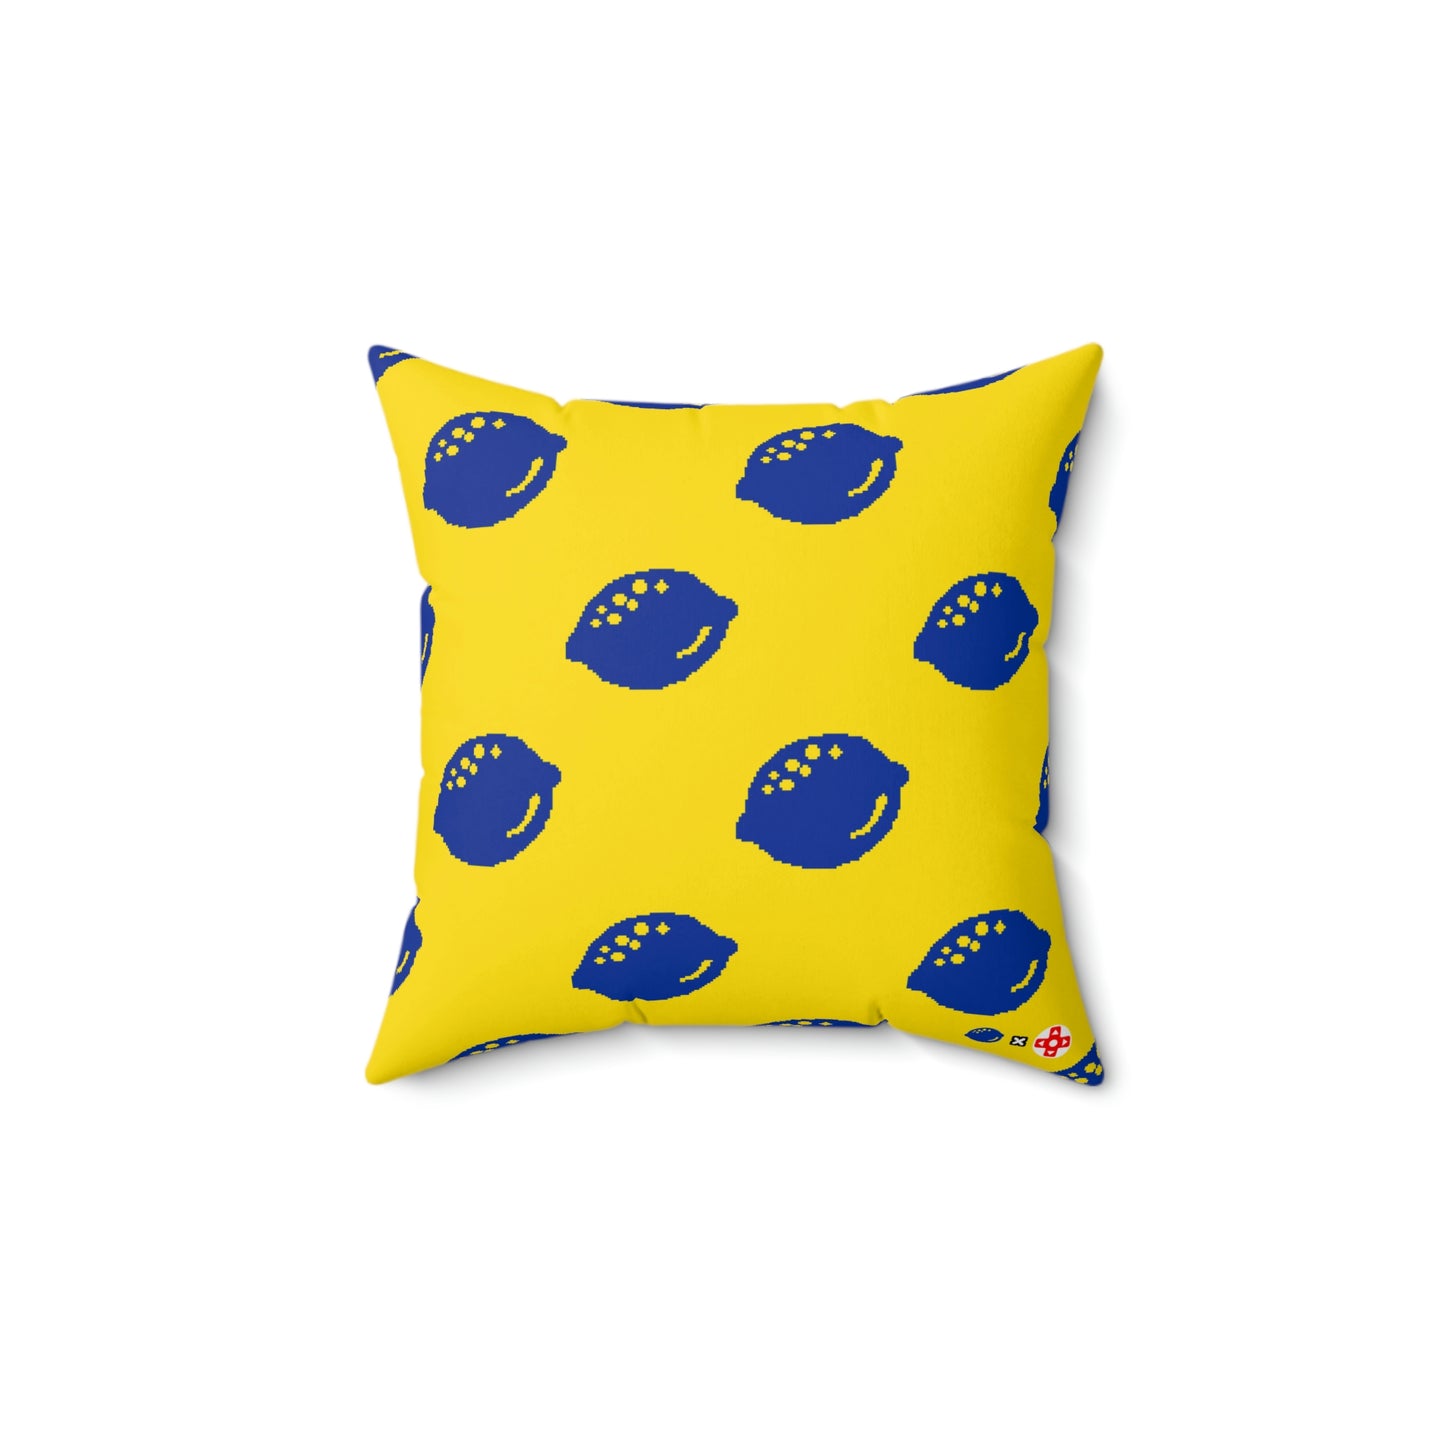 ALS x GSF Pillow - 8bit Lemon Hero Pattern